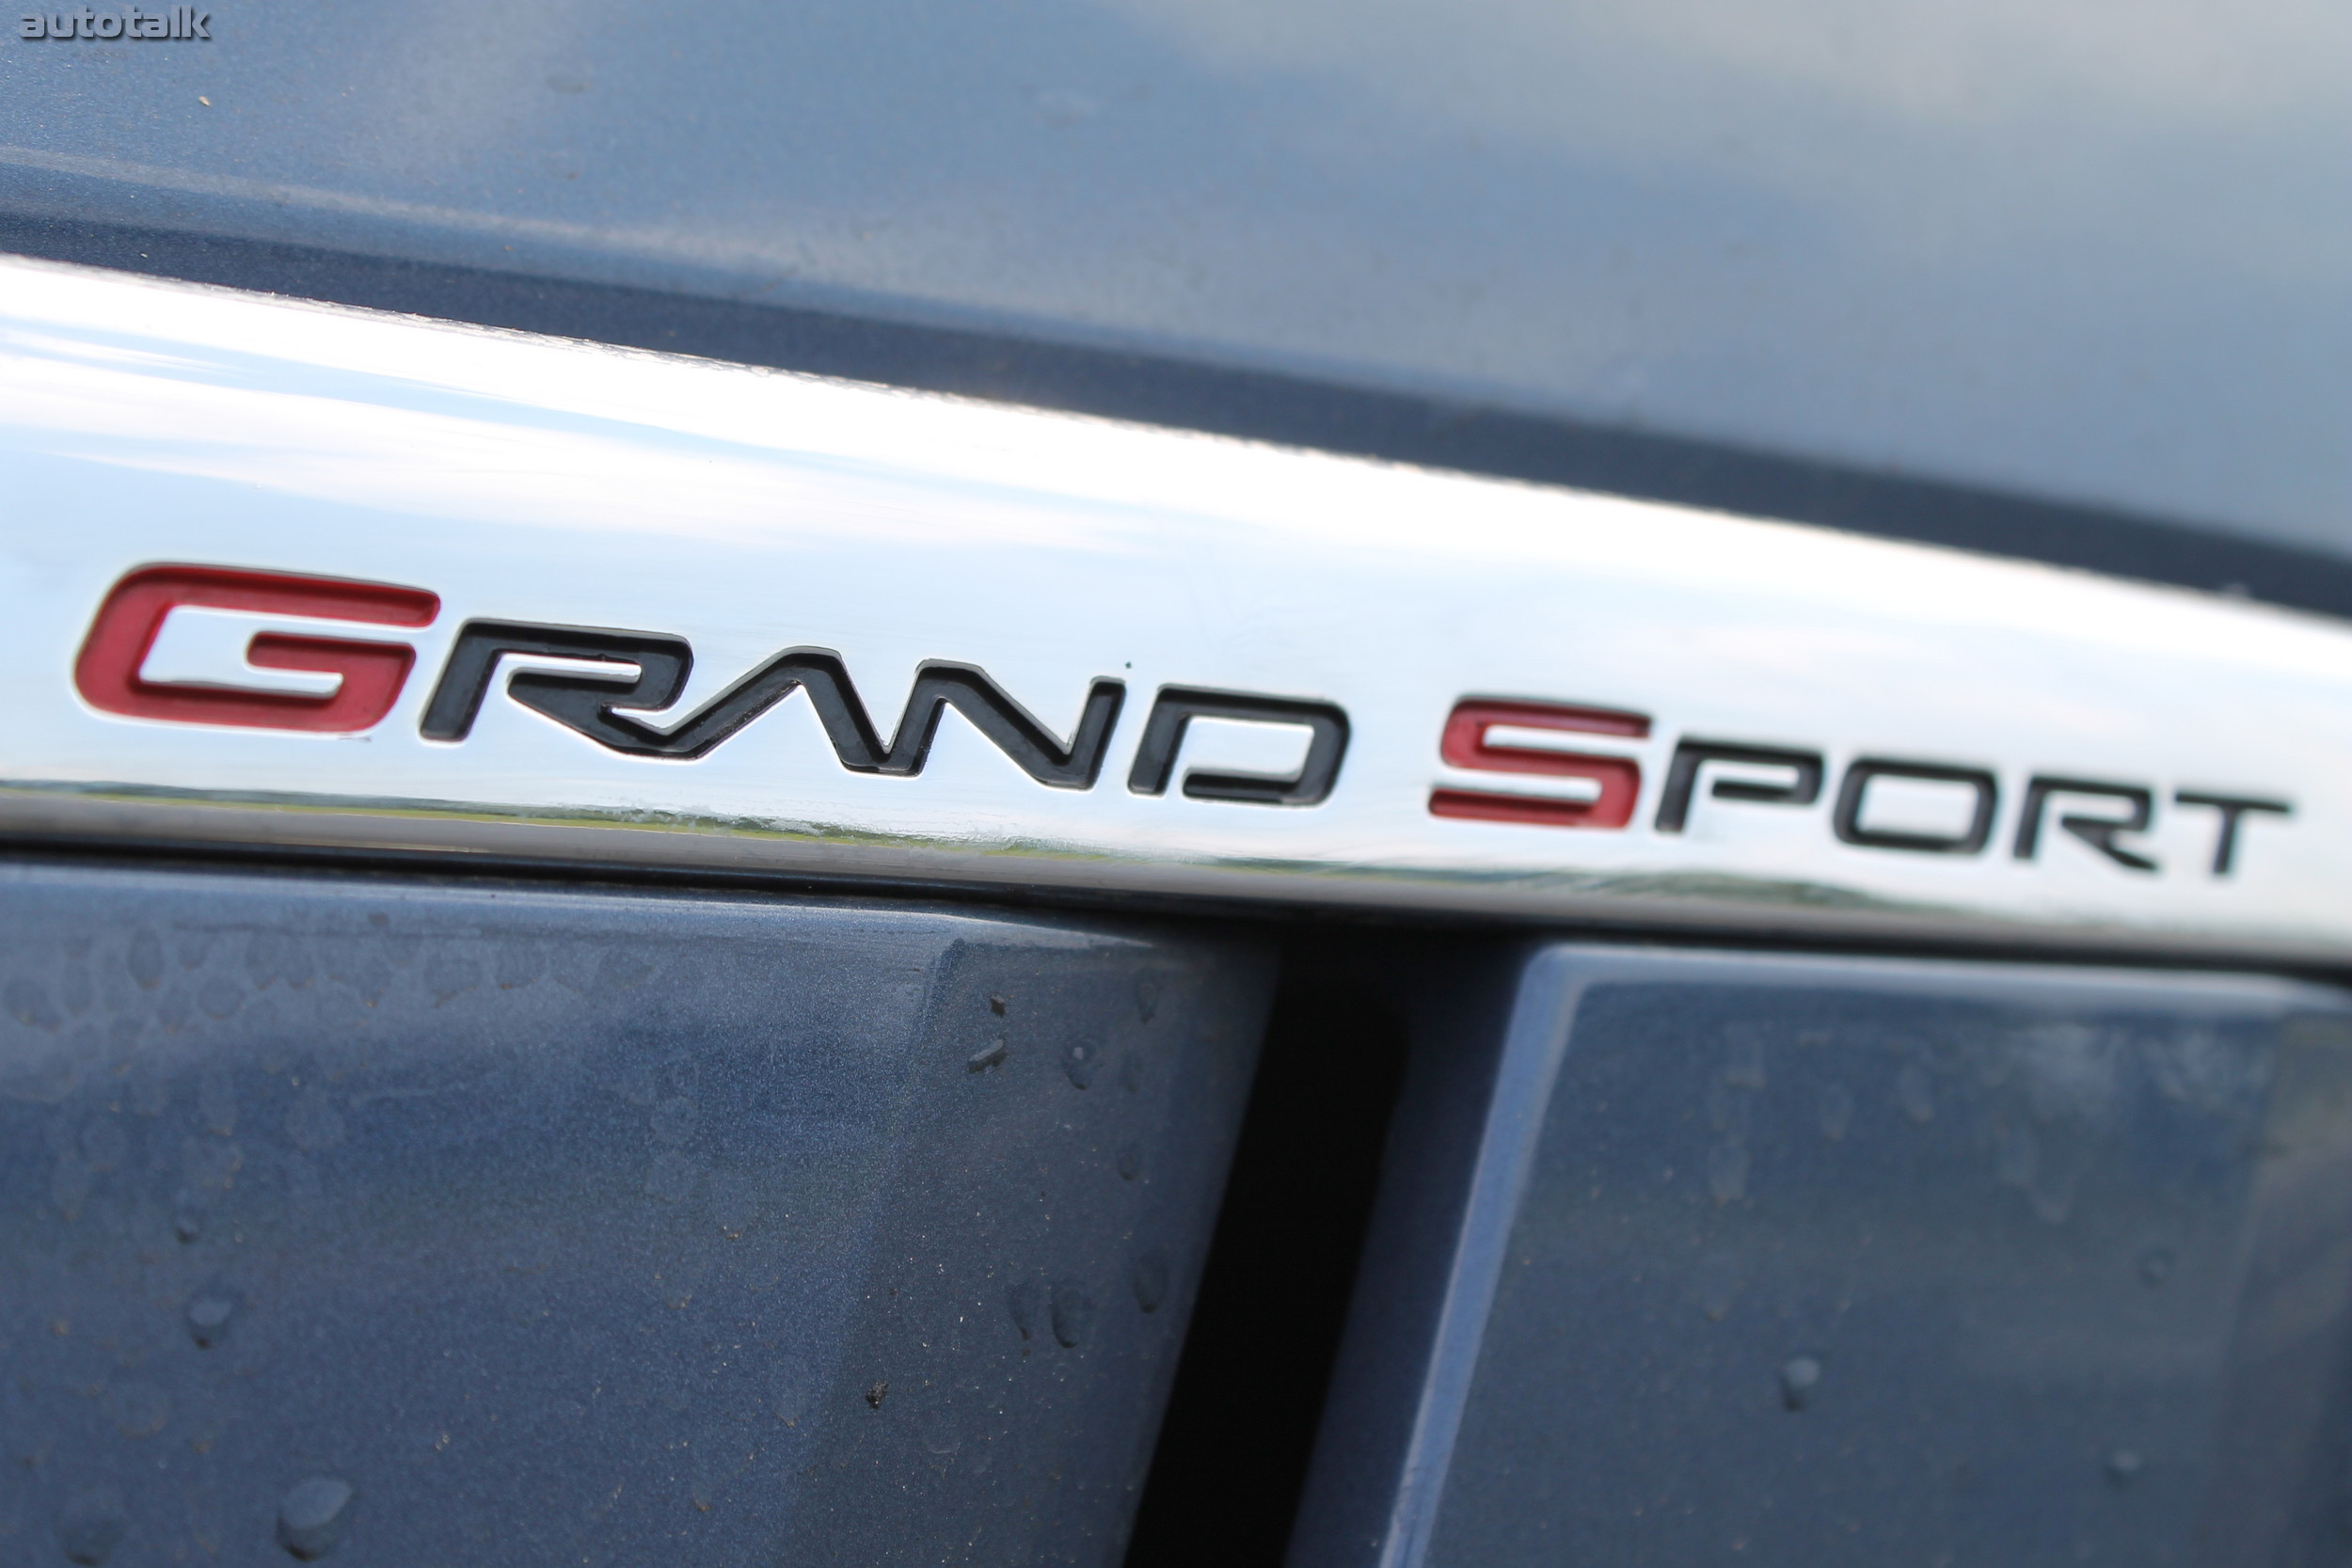 2011 Chevrolet Corvette Grand Sport Convertible Review